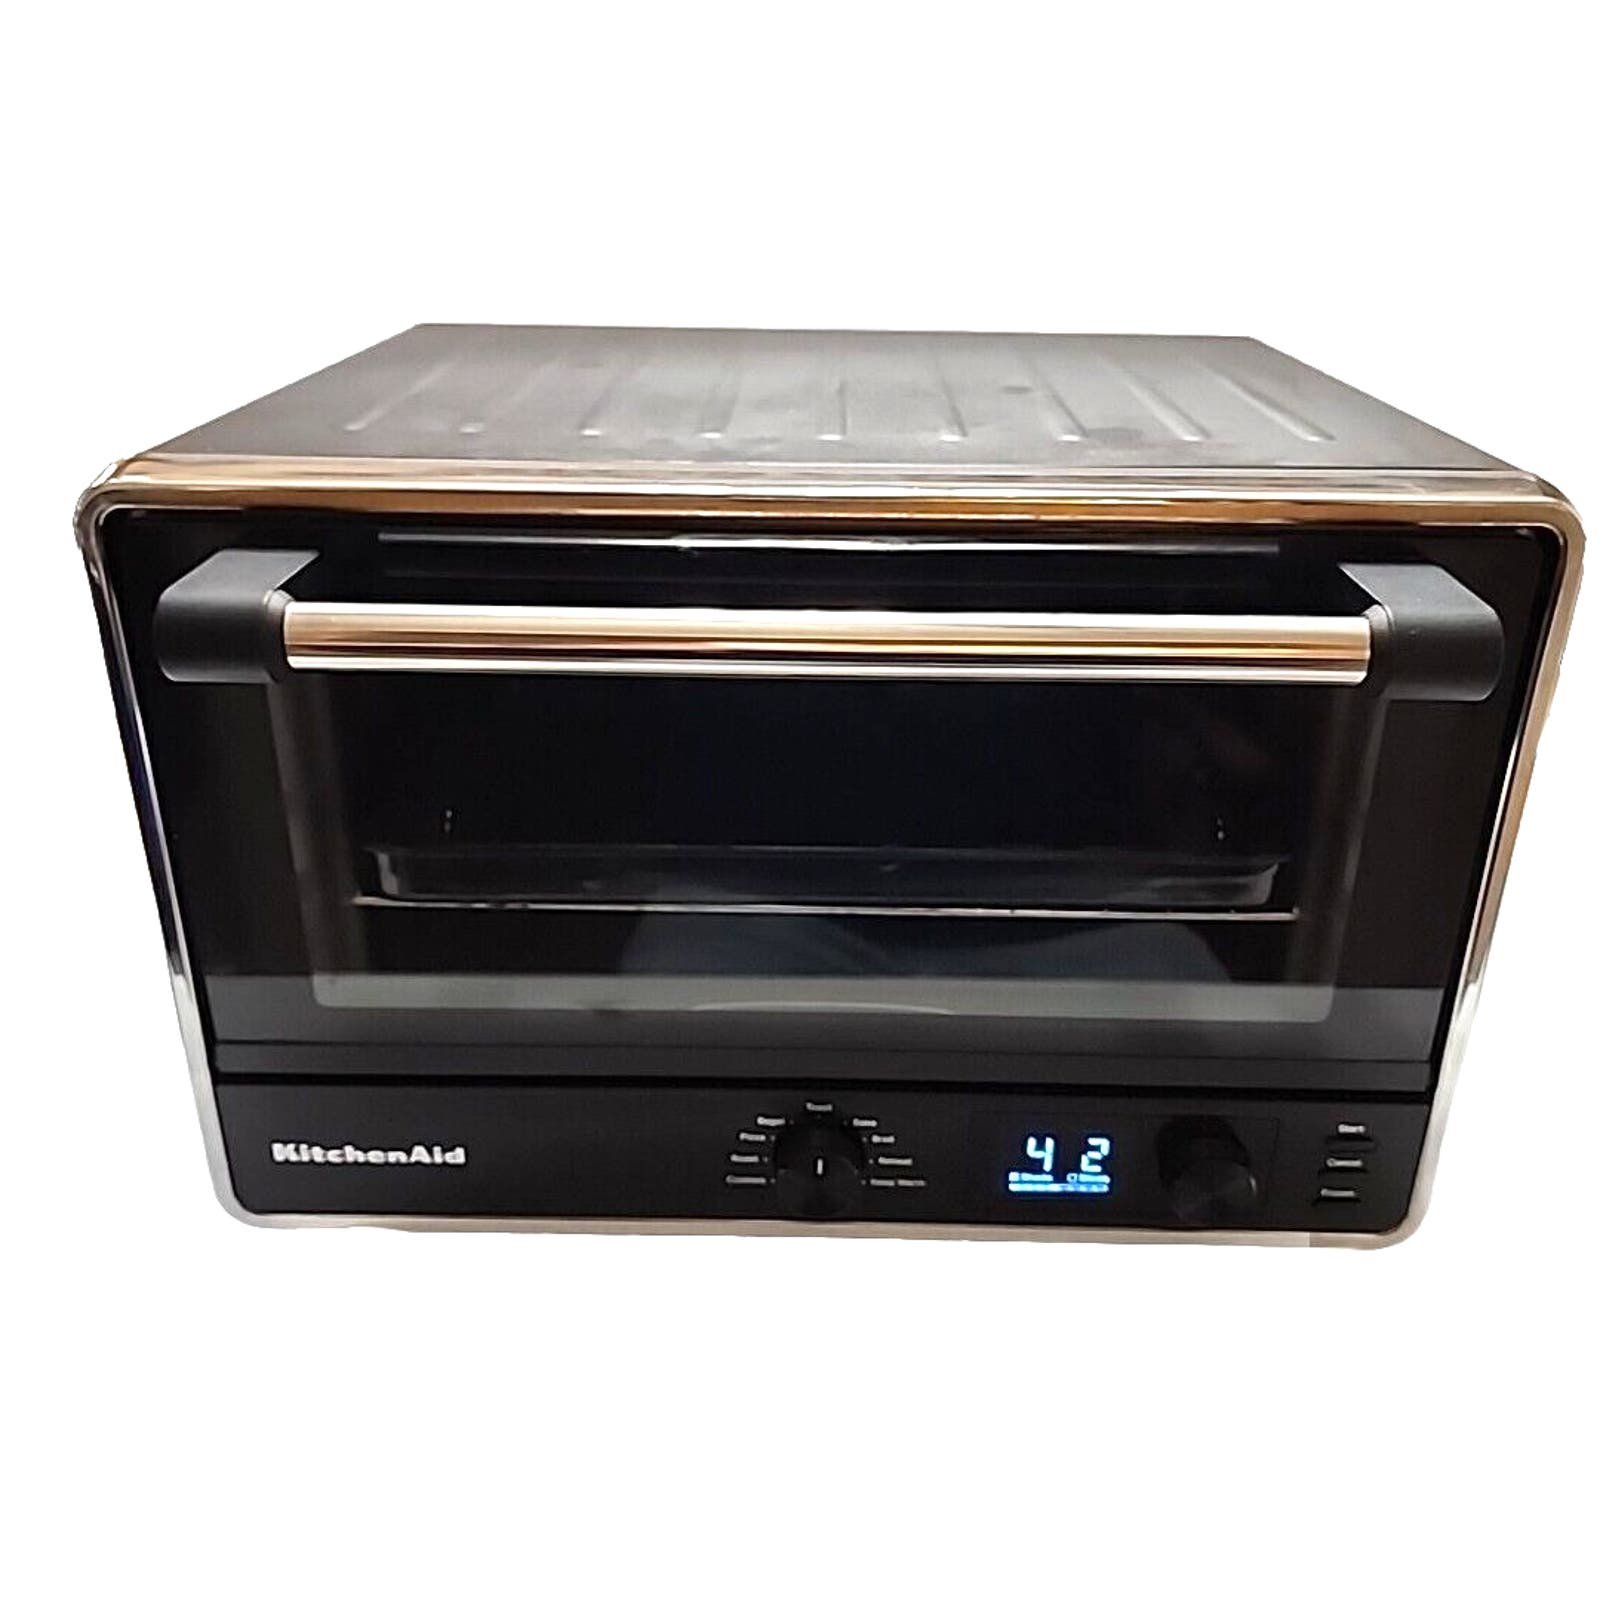 KitchenAid KCO211 Digital Countertop Toaster Oven Black